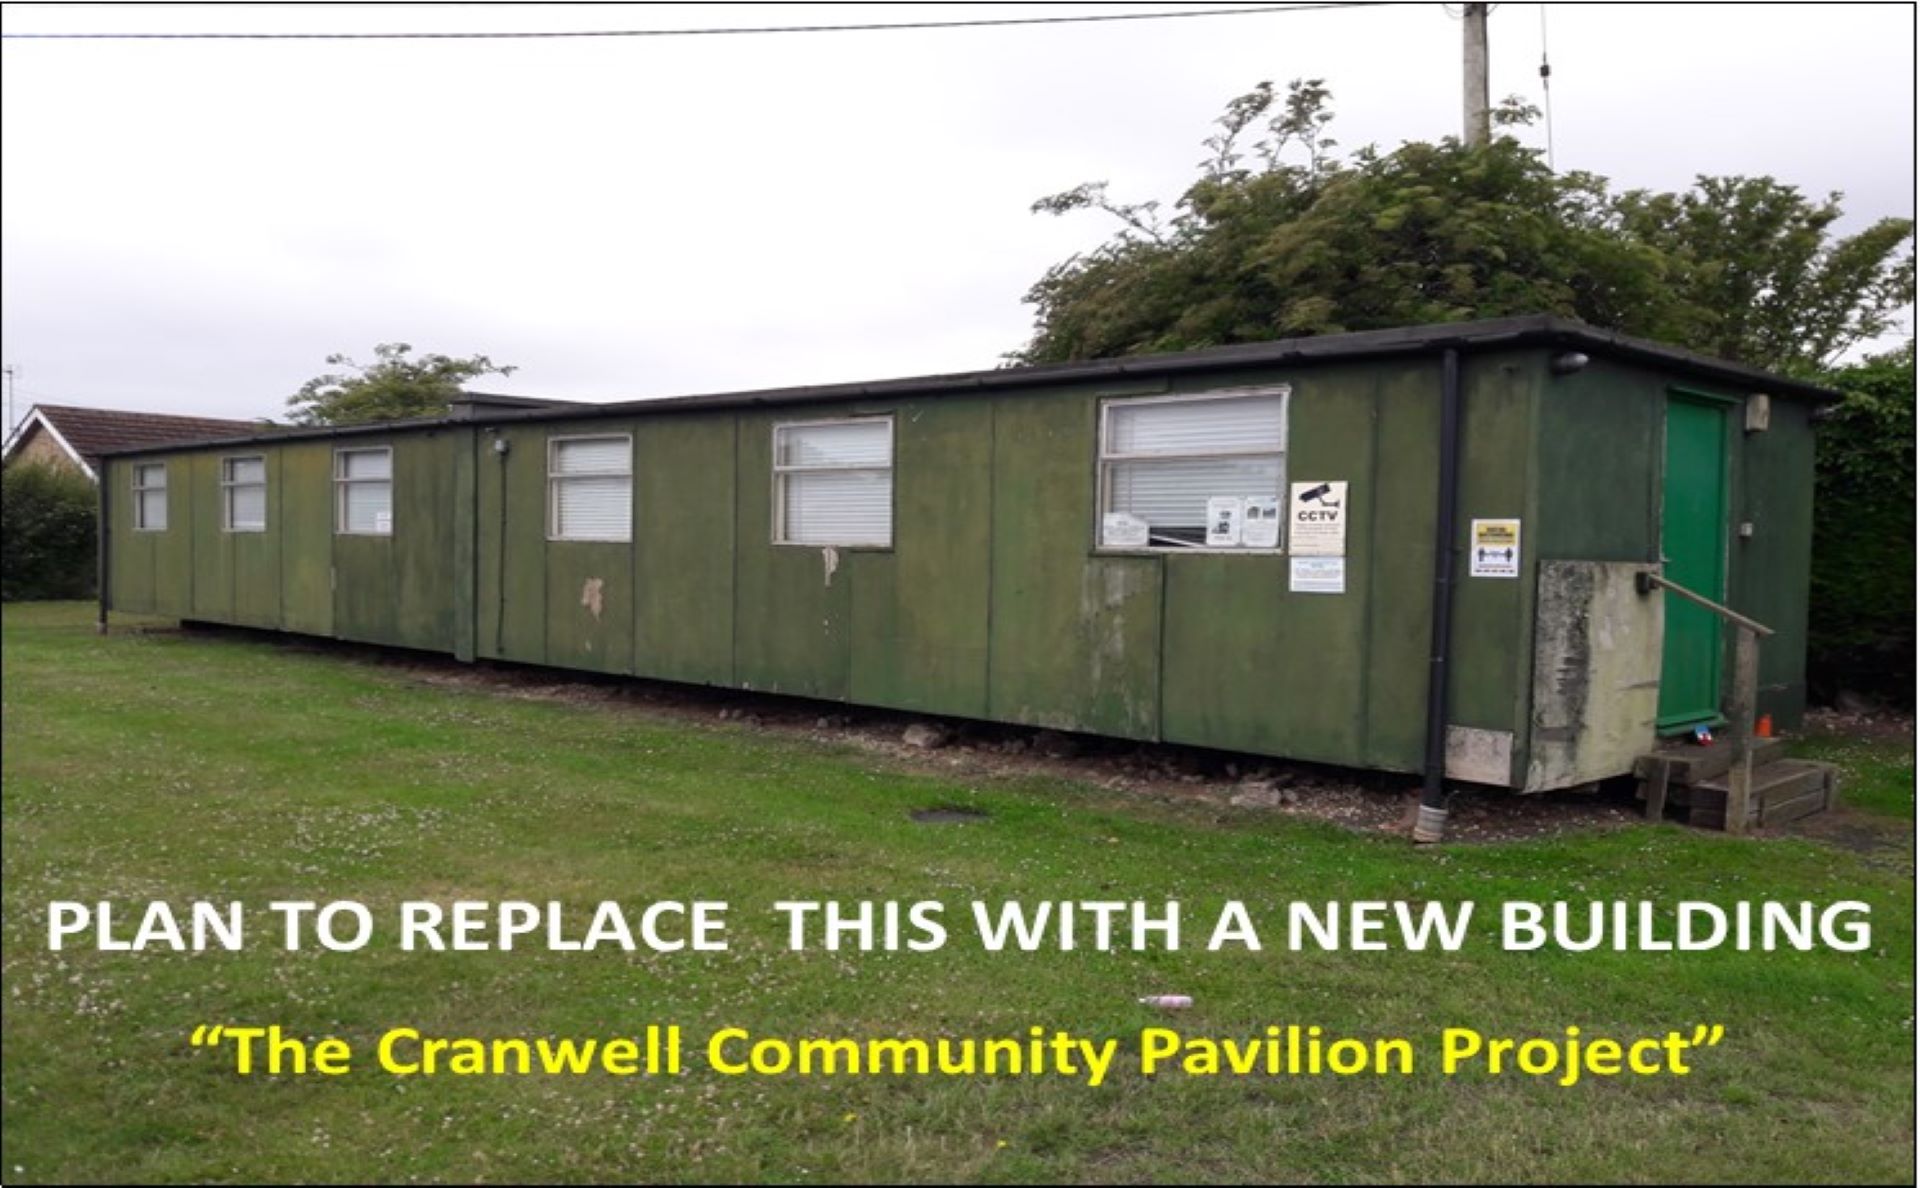 Community Pavilion Project picture resized